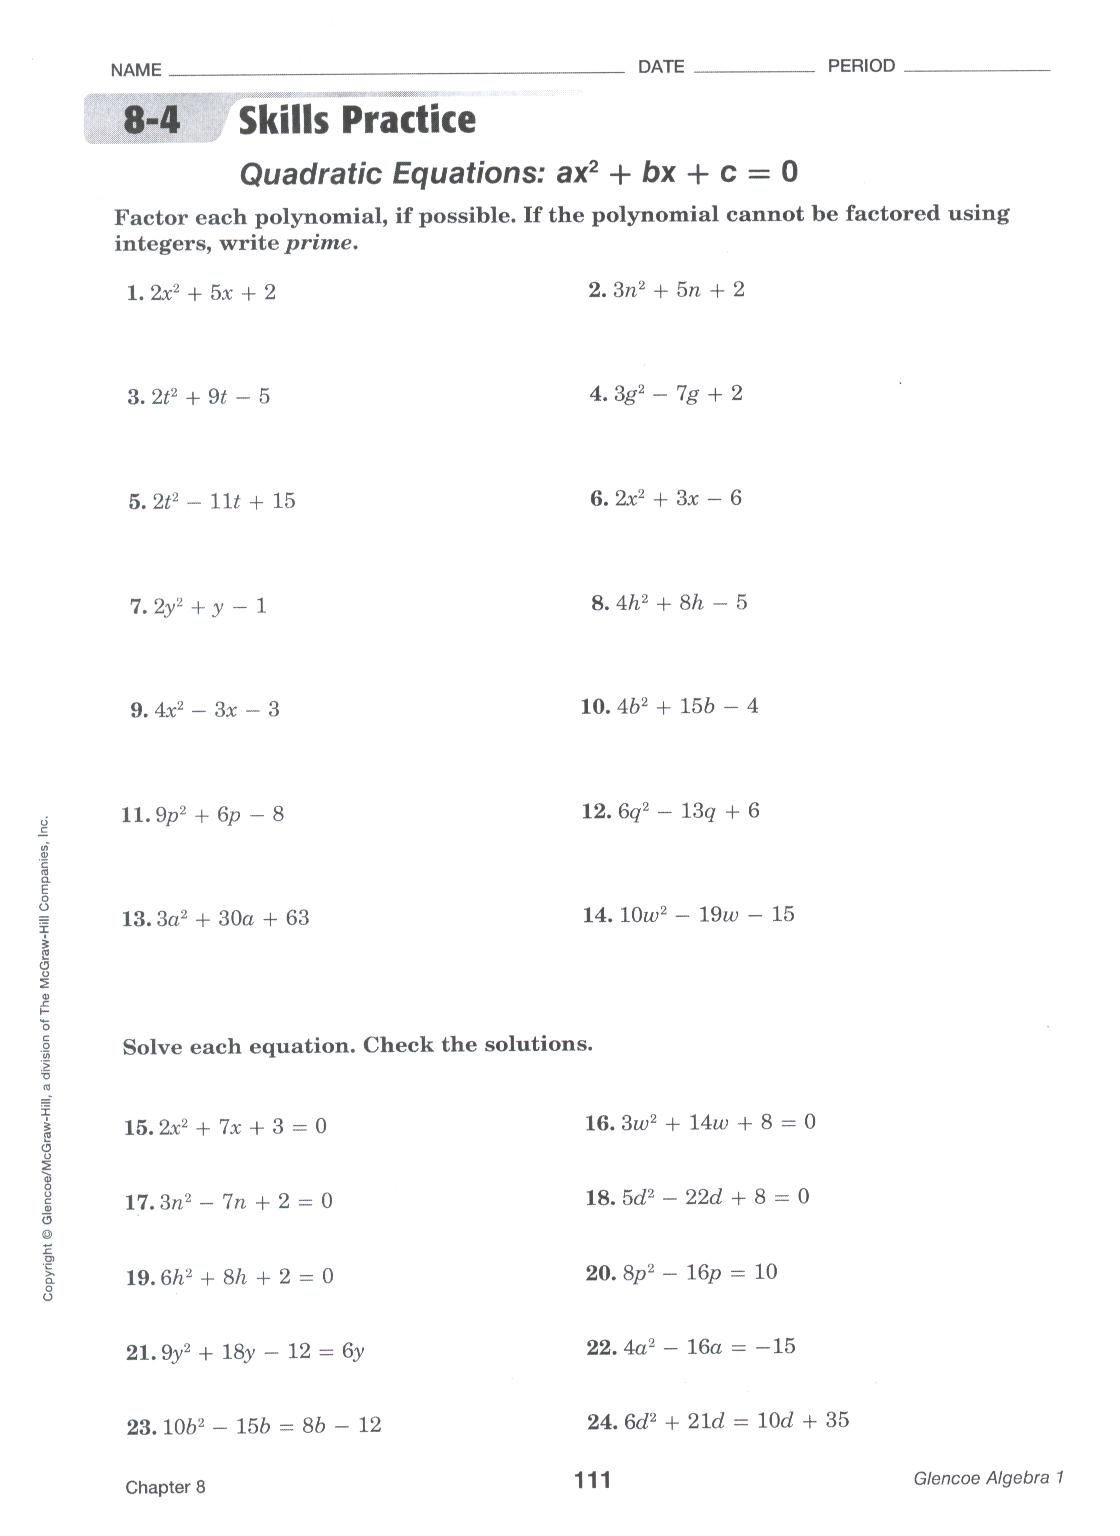 Quadratic Equation Worksheet with Answers Quadratic formula Worksheet Yahoo Image Search Results